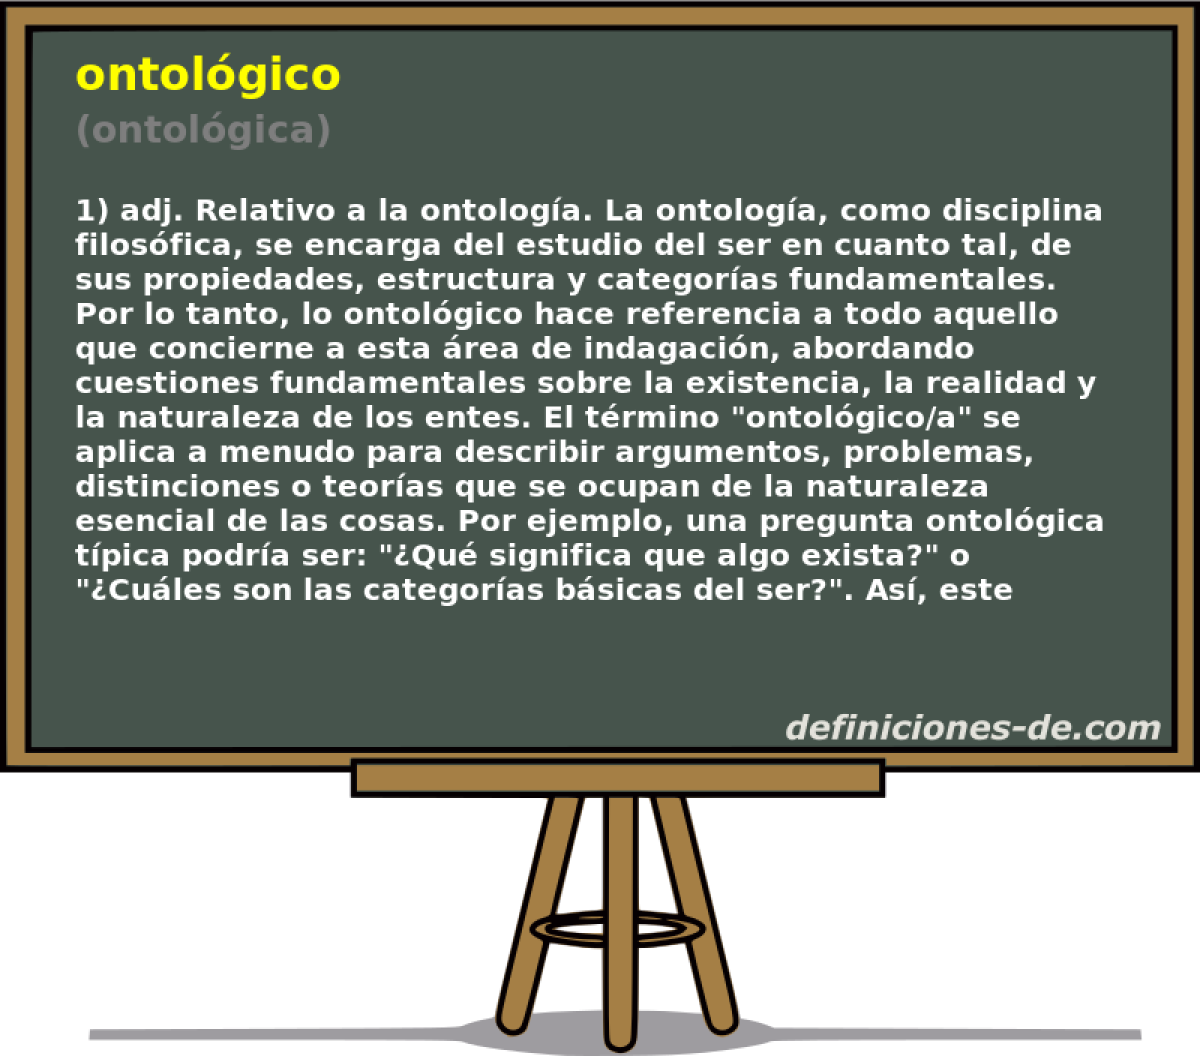 ontolgico (ontolgica)